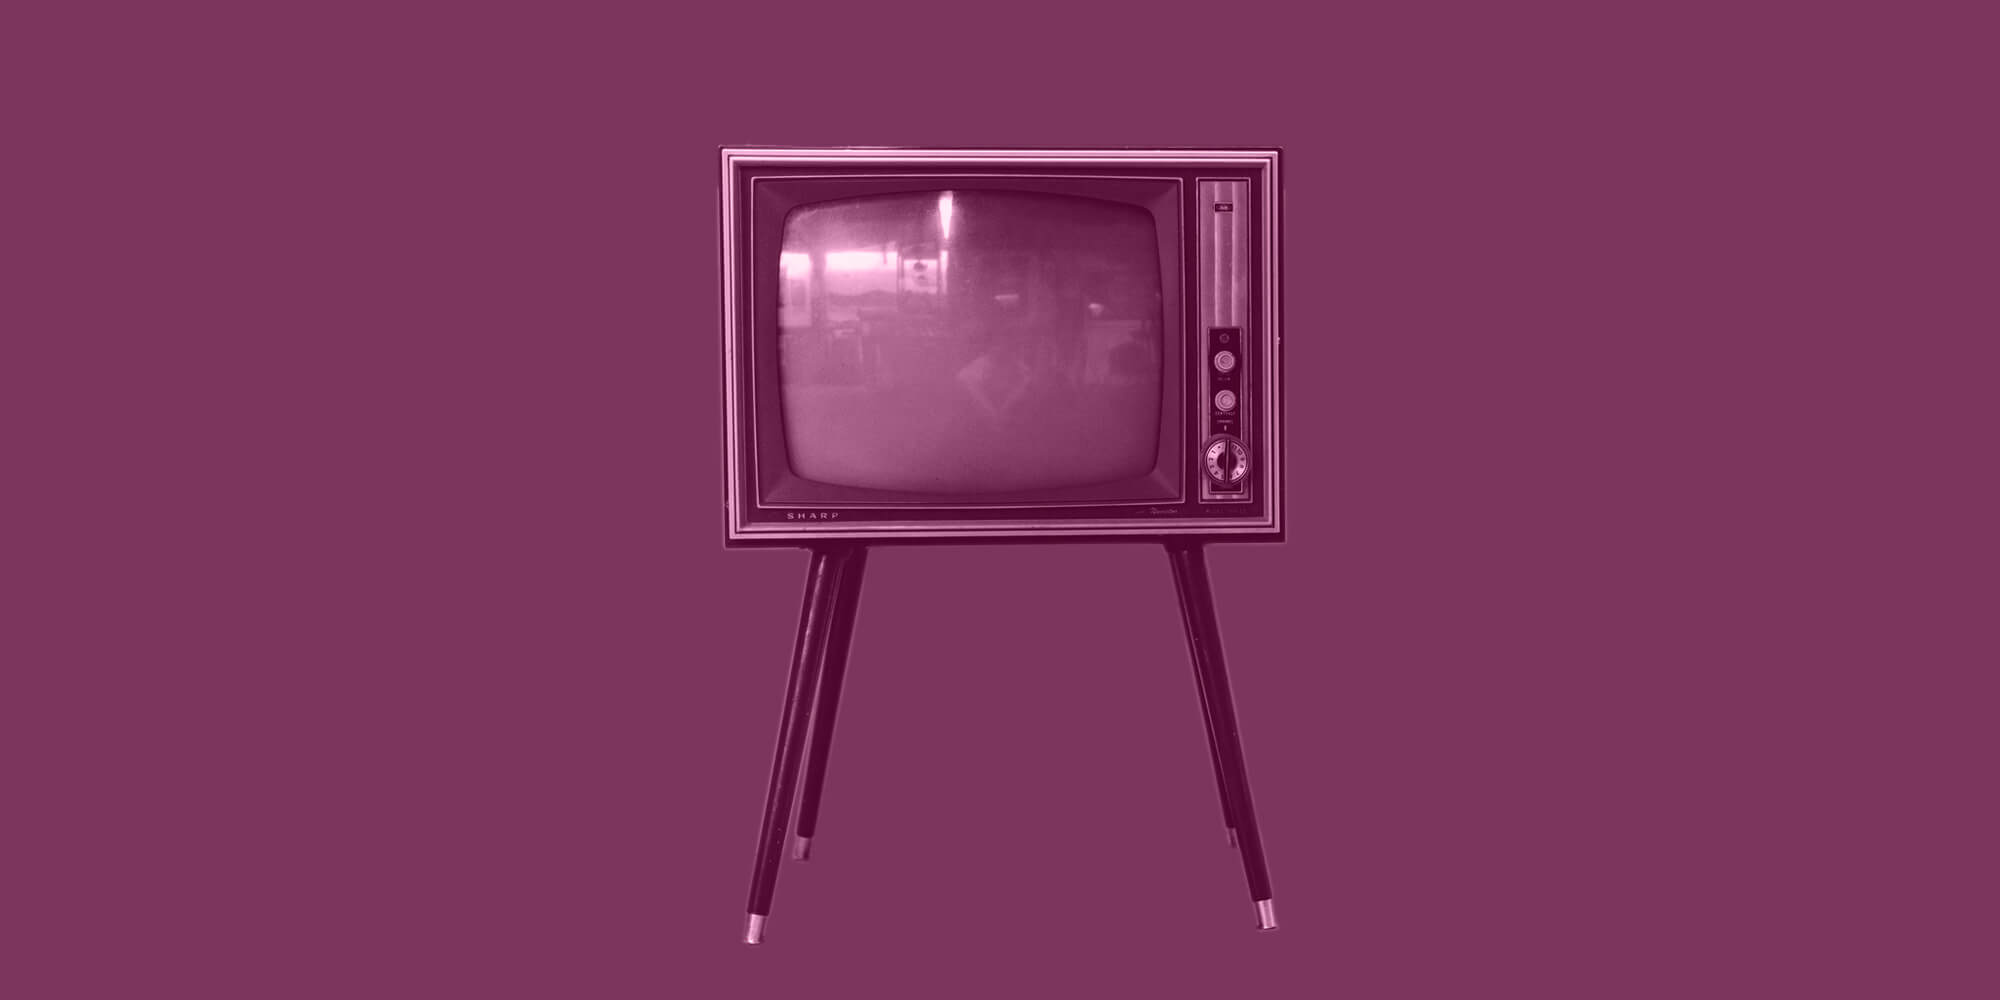 Old style TV. Media controls the addiction narrative